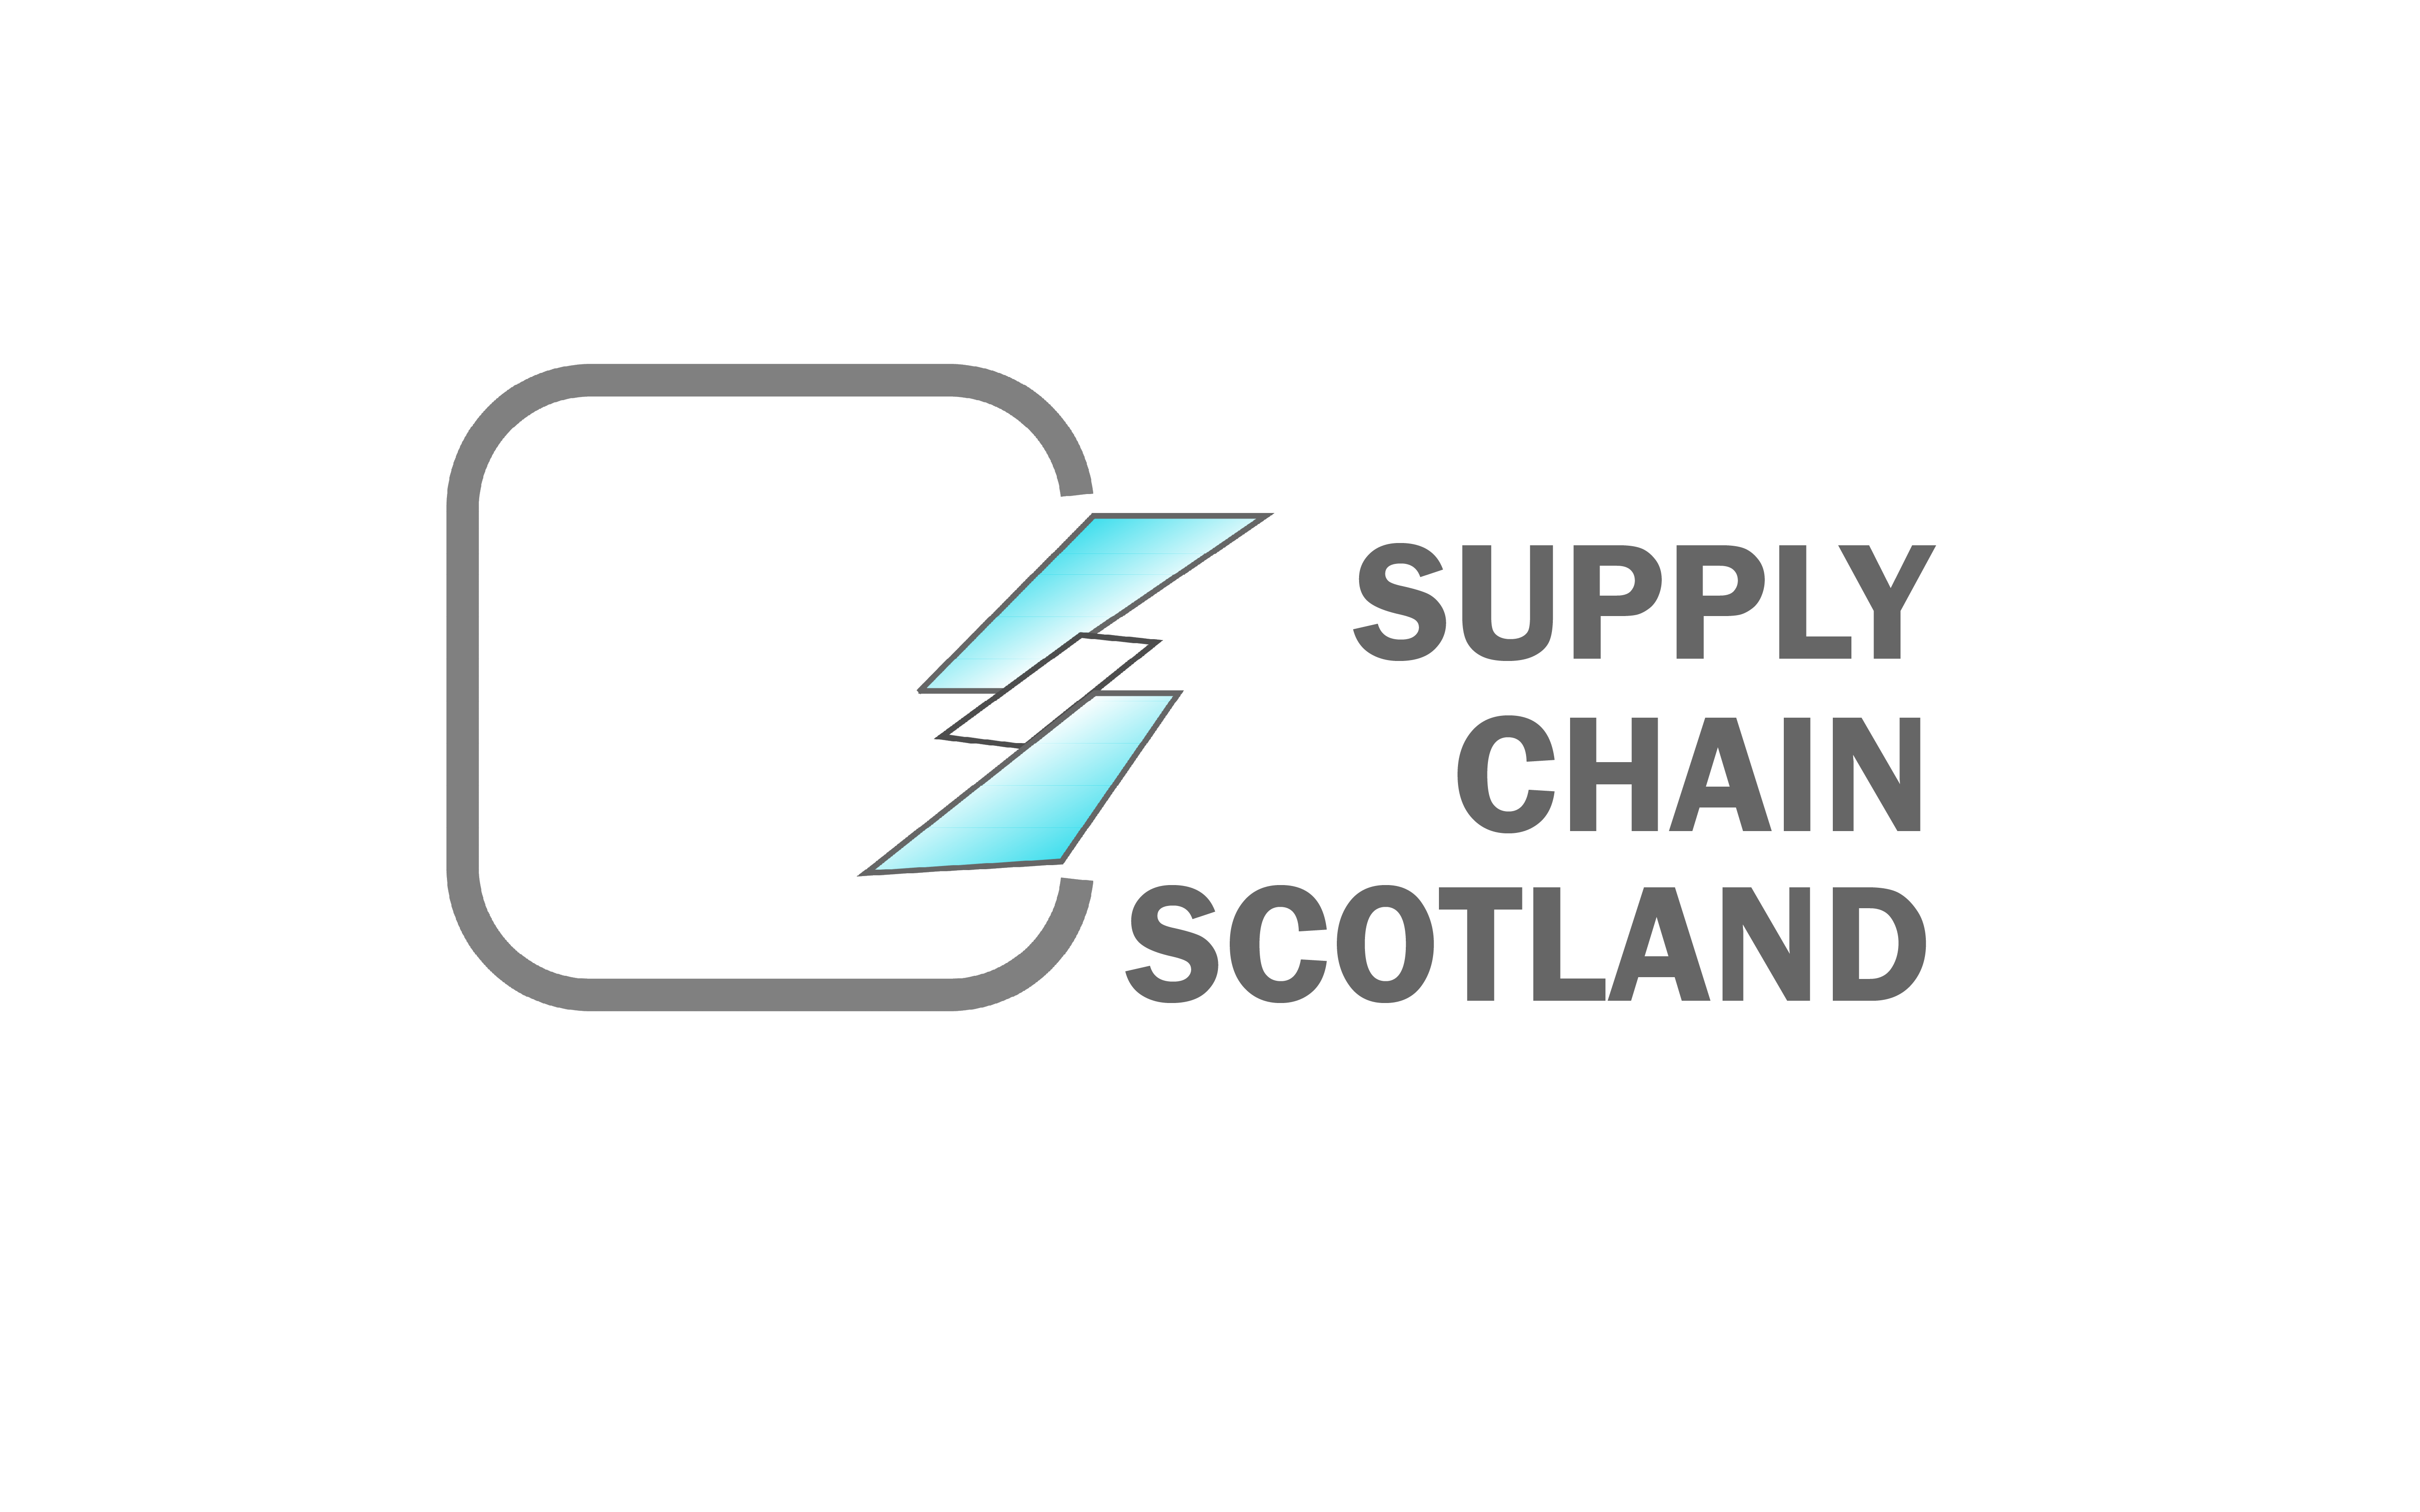 Supply chain scotland